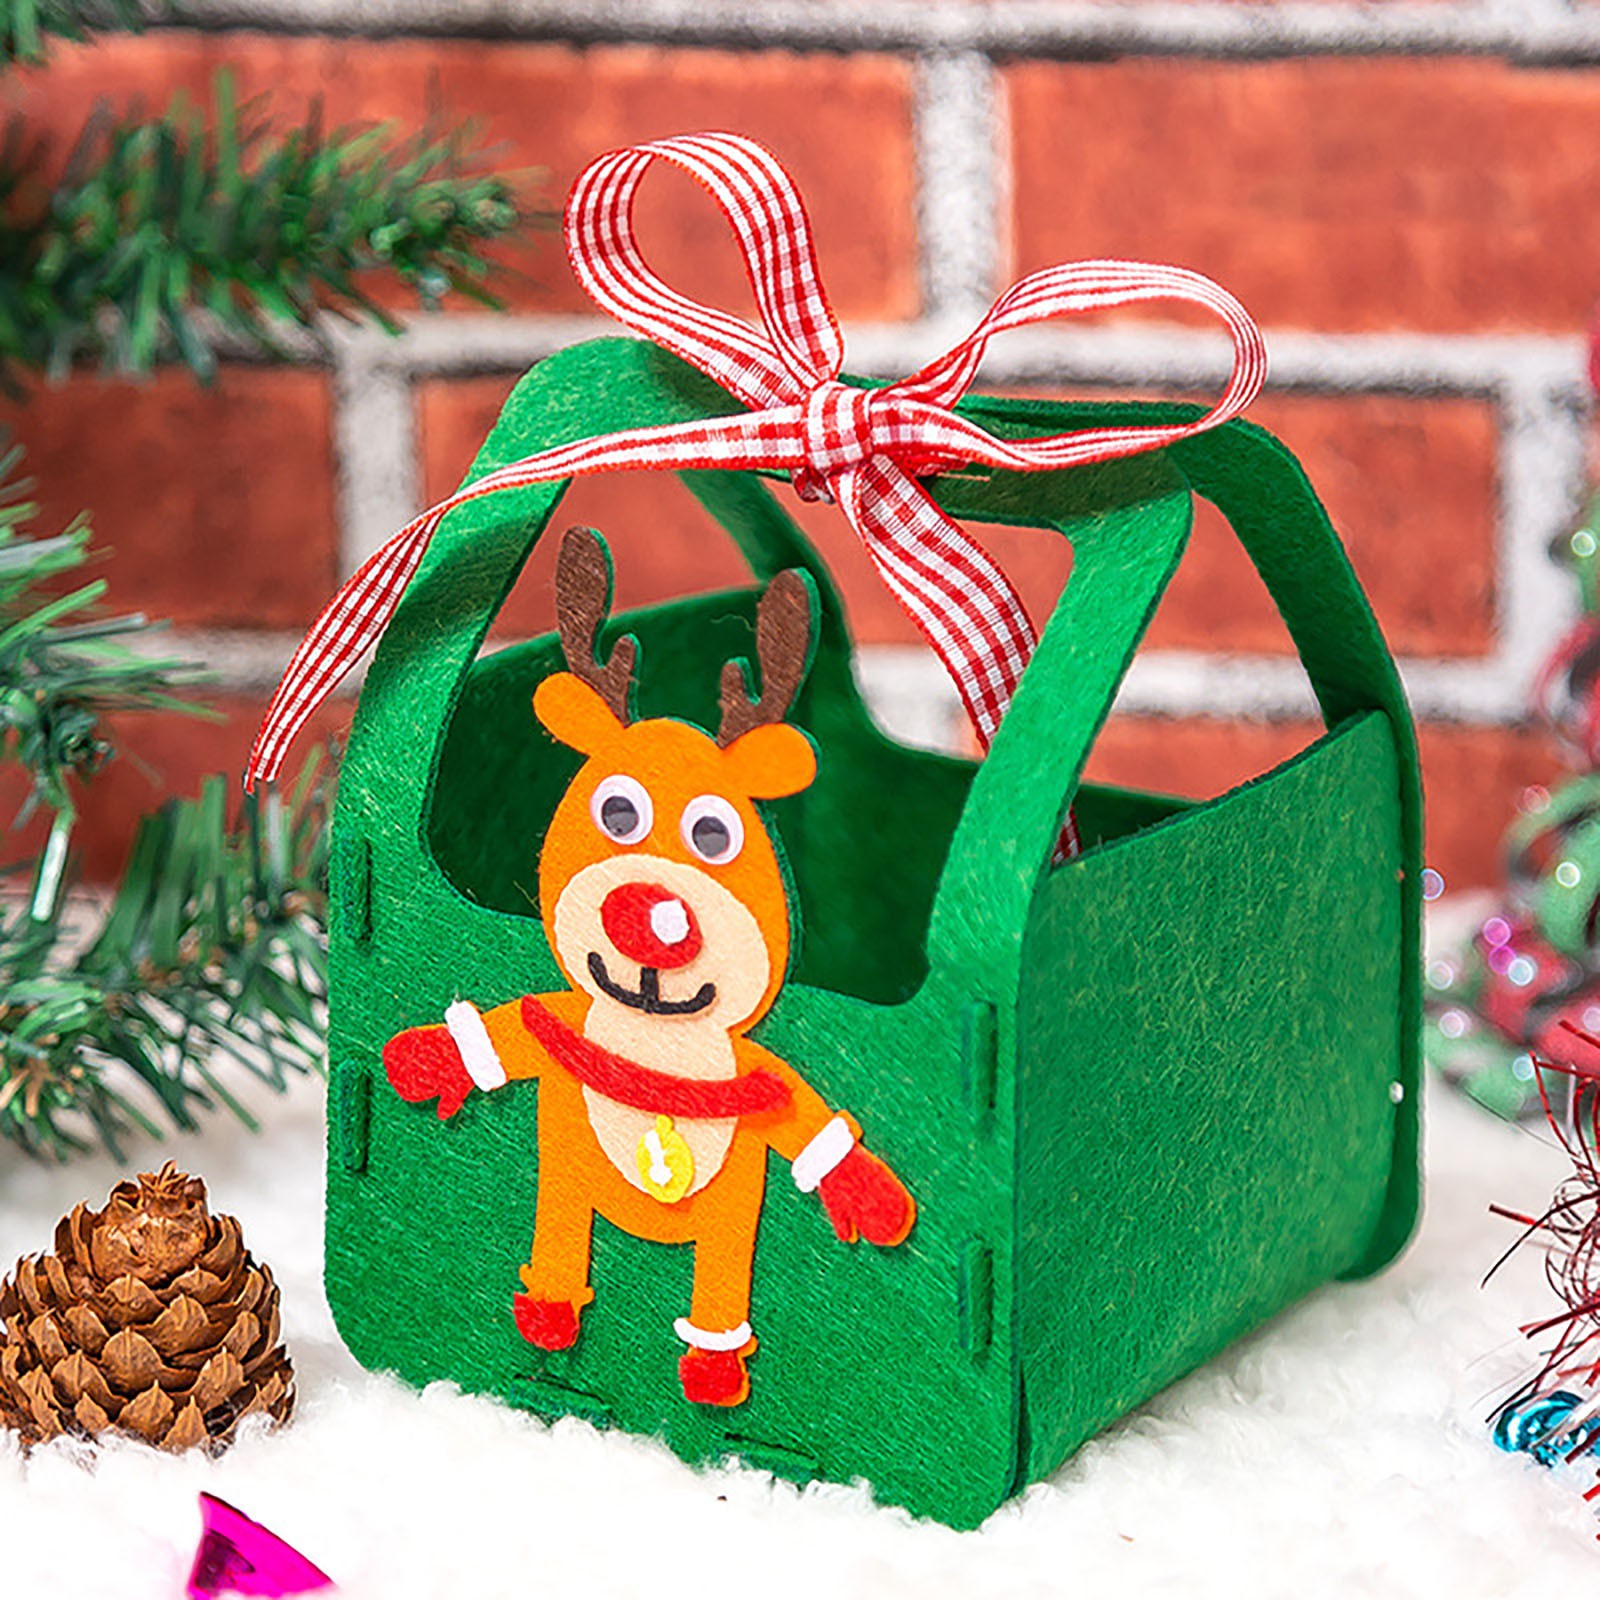 Heiheiup Christmas Handmade Diy Non Woven Gift Bag Material Package  Christmas Bag Peace Fruit Bag Kindergarten*1pcs Kids Arts And Crafts Ages  2-5